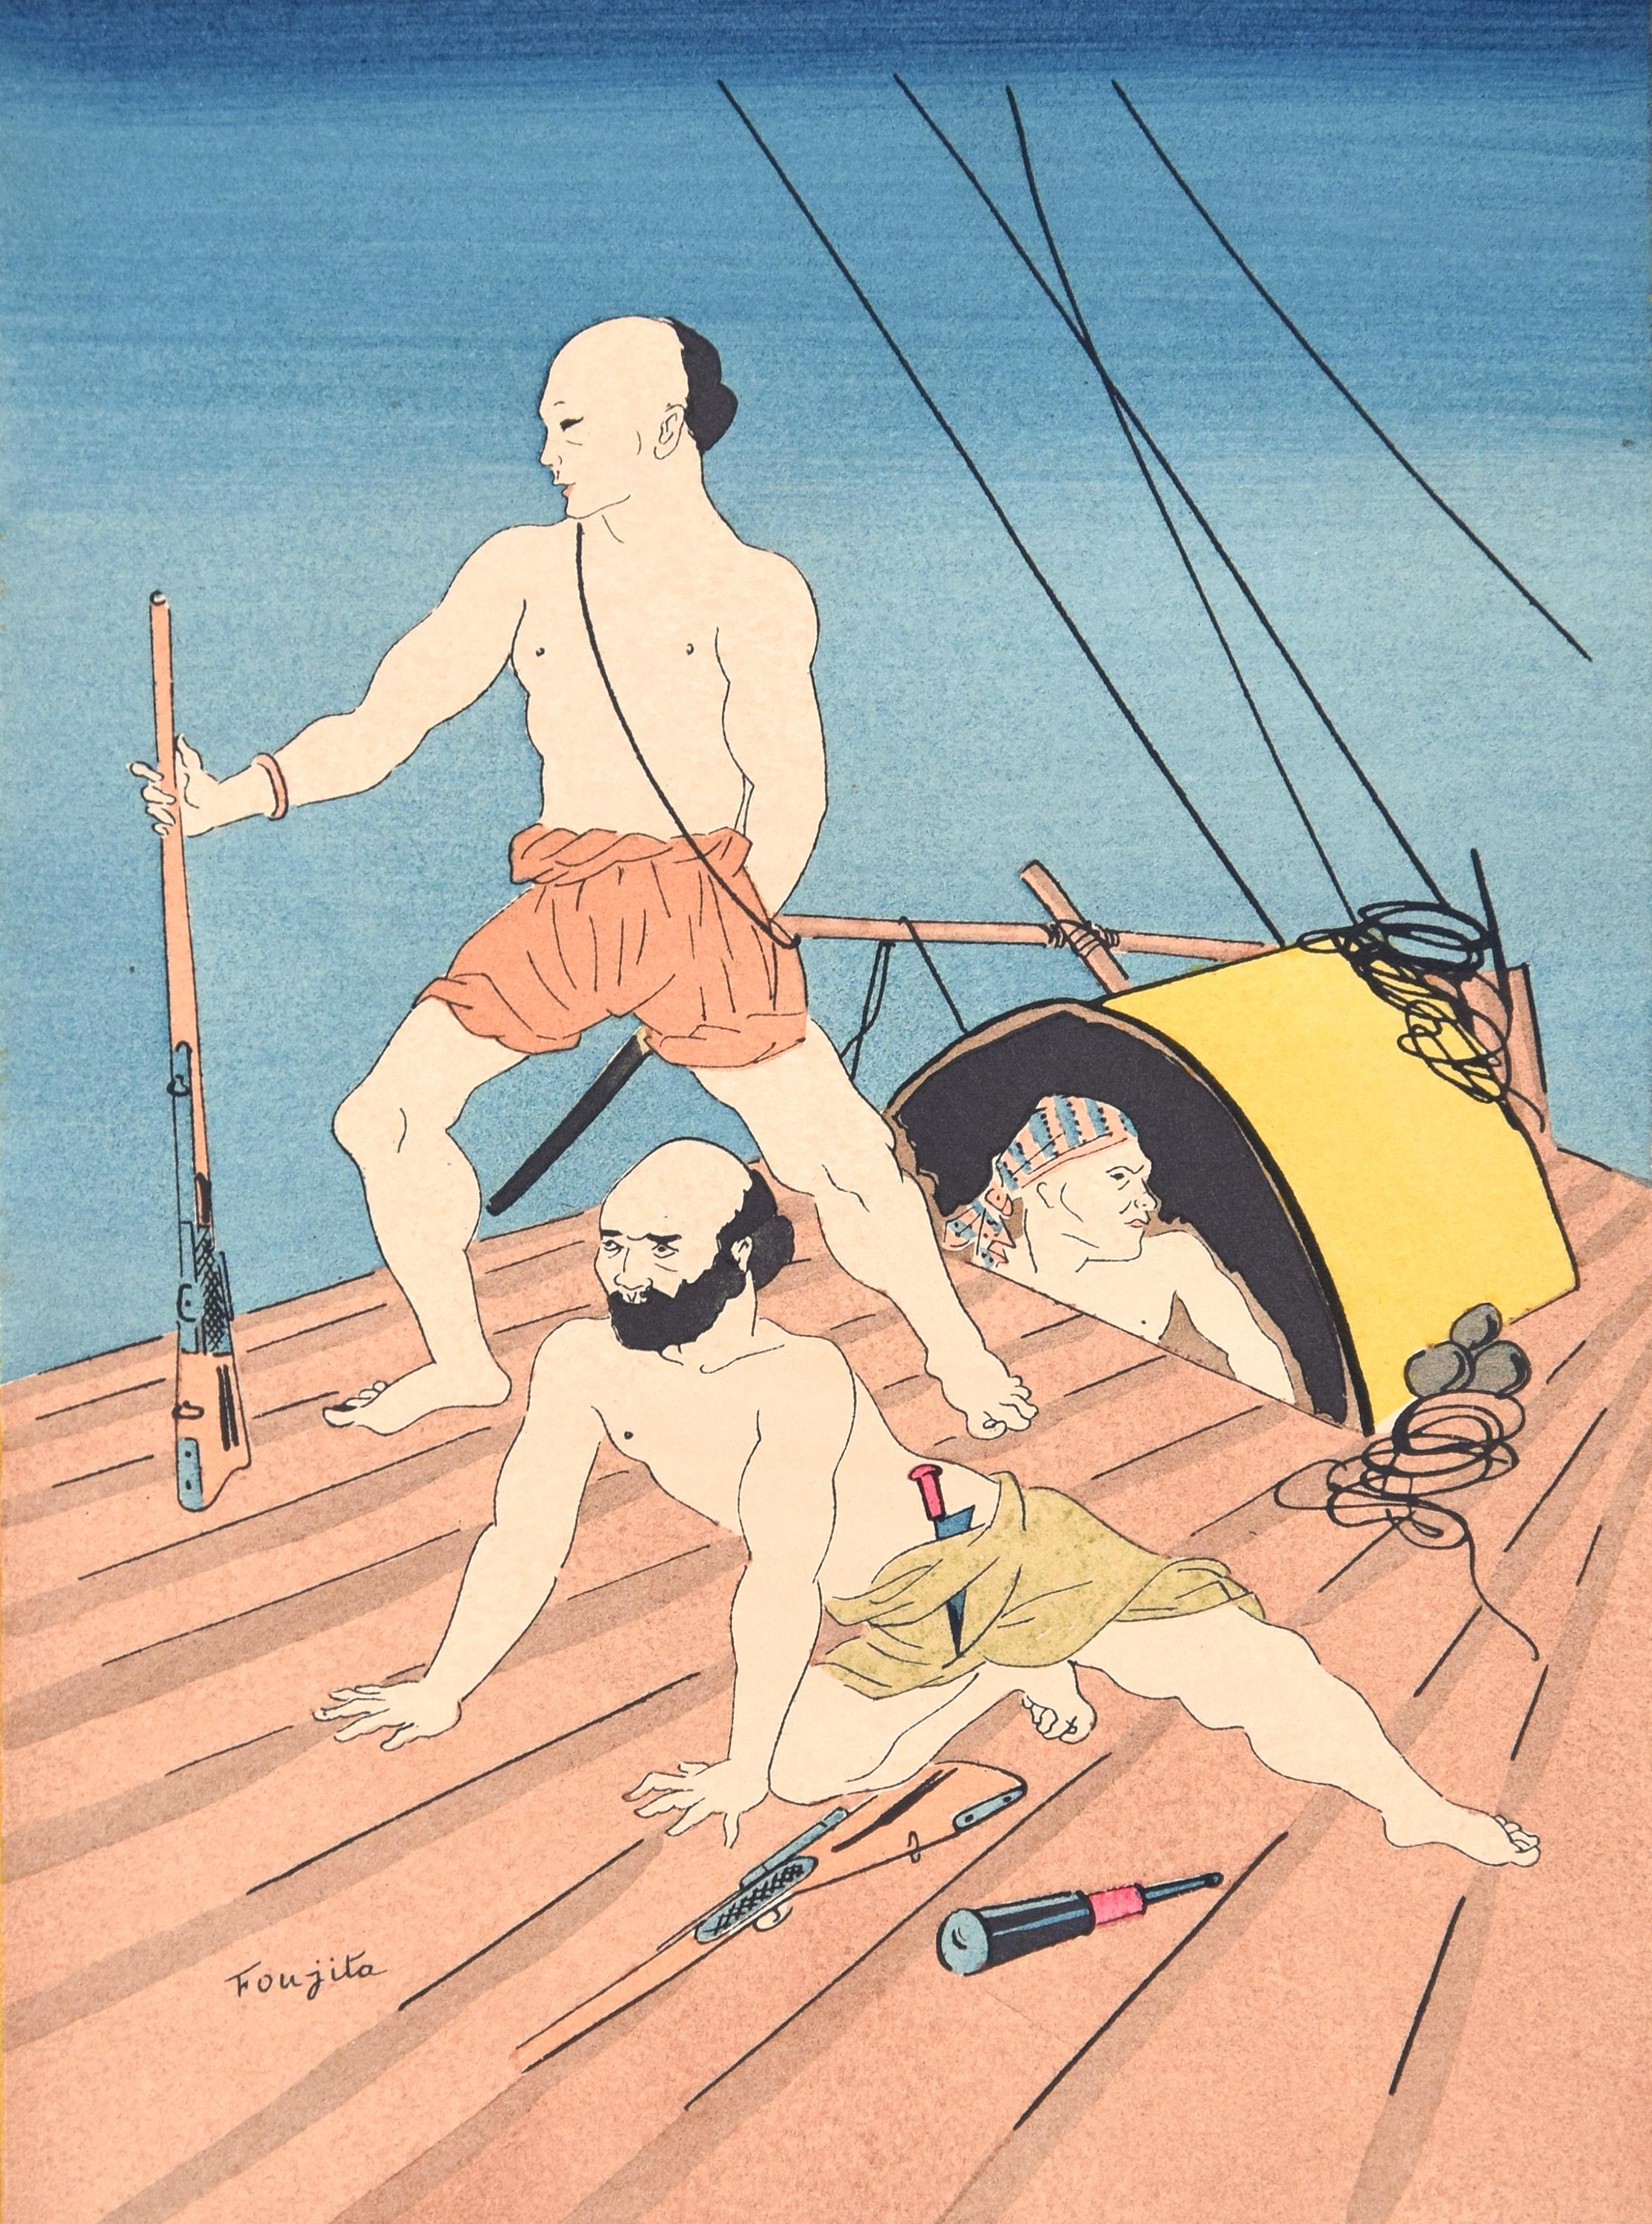 (after) Leonard Tsuguharu Foujita Figurative Print - The Hunting - Lithograph after L.T. Foujita - 1928